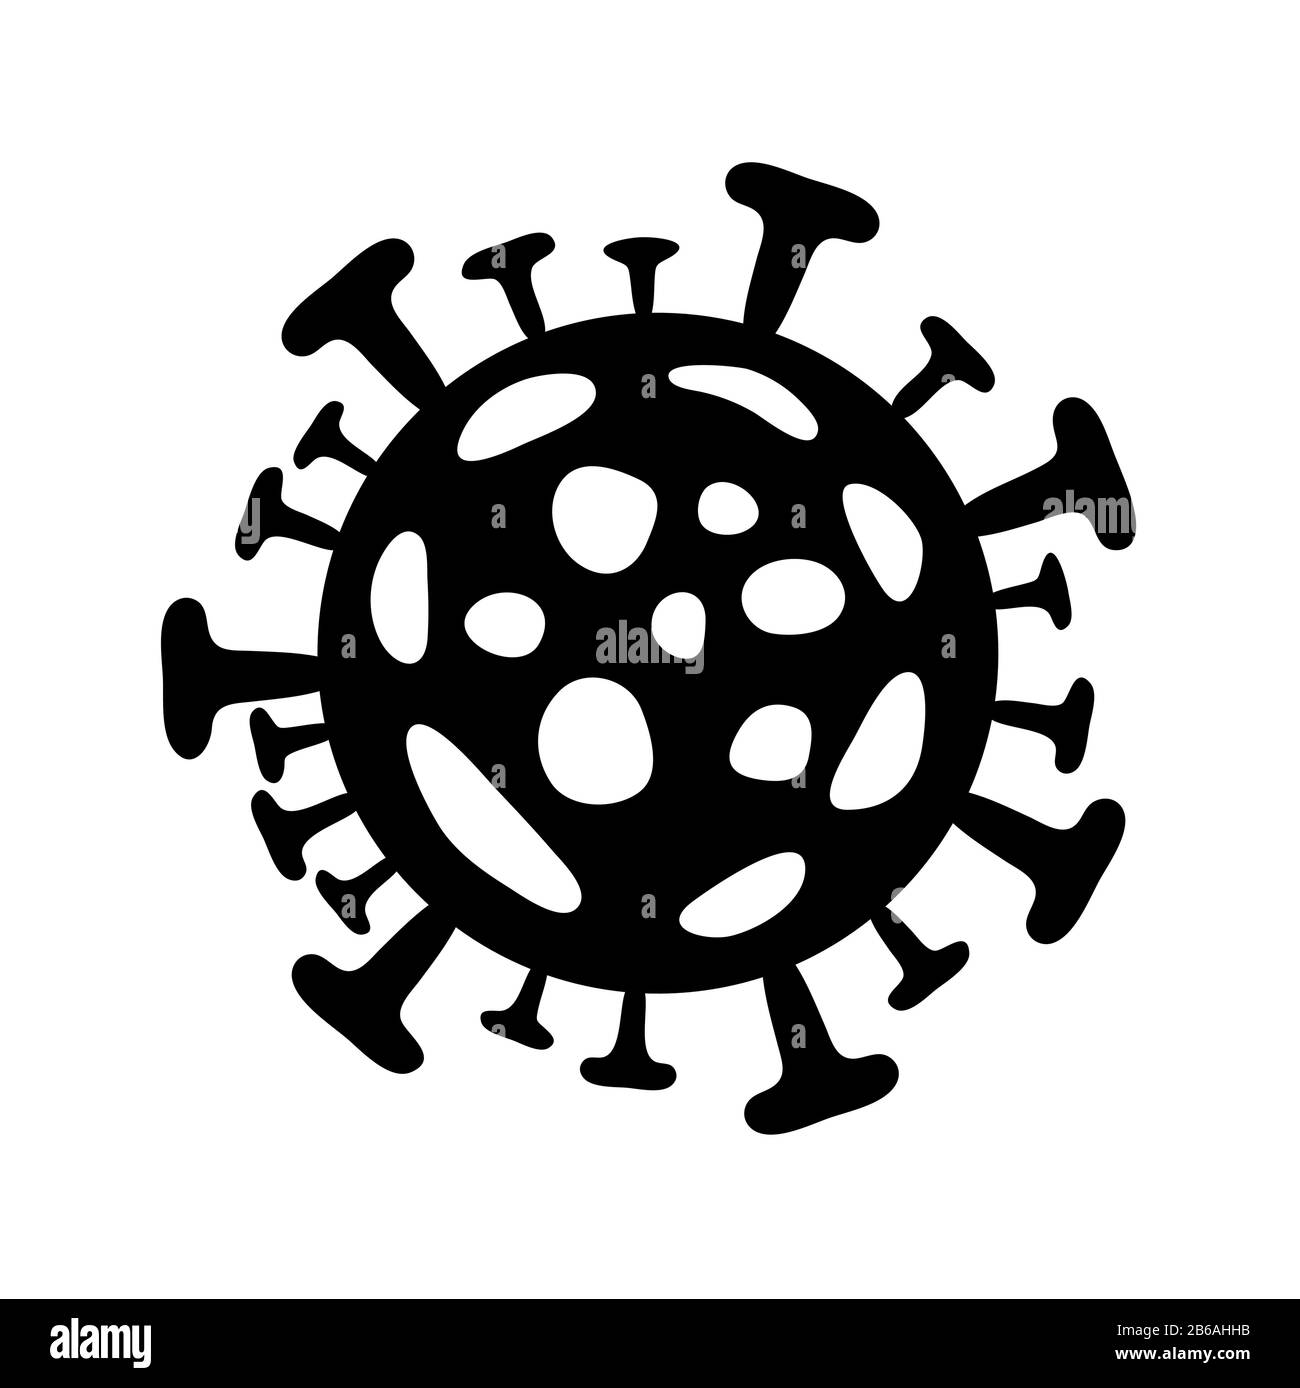 Coronavirus icon. Vector logo 2019-ncov, flat black pandemic virus Stock Vector